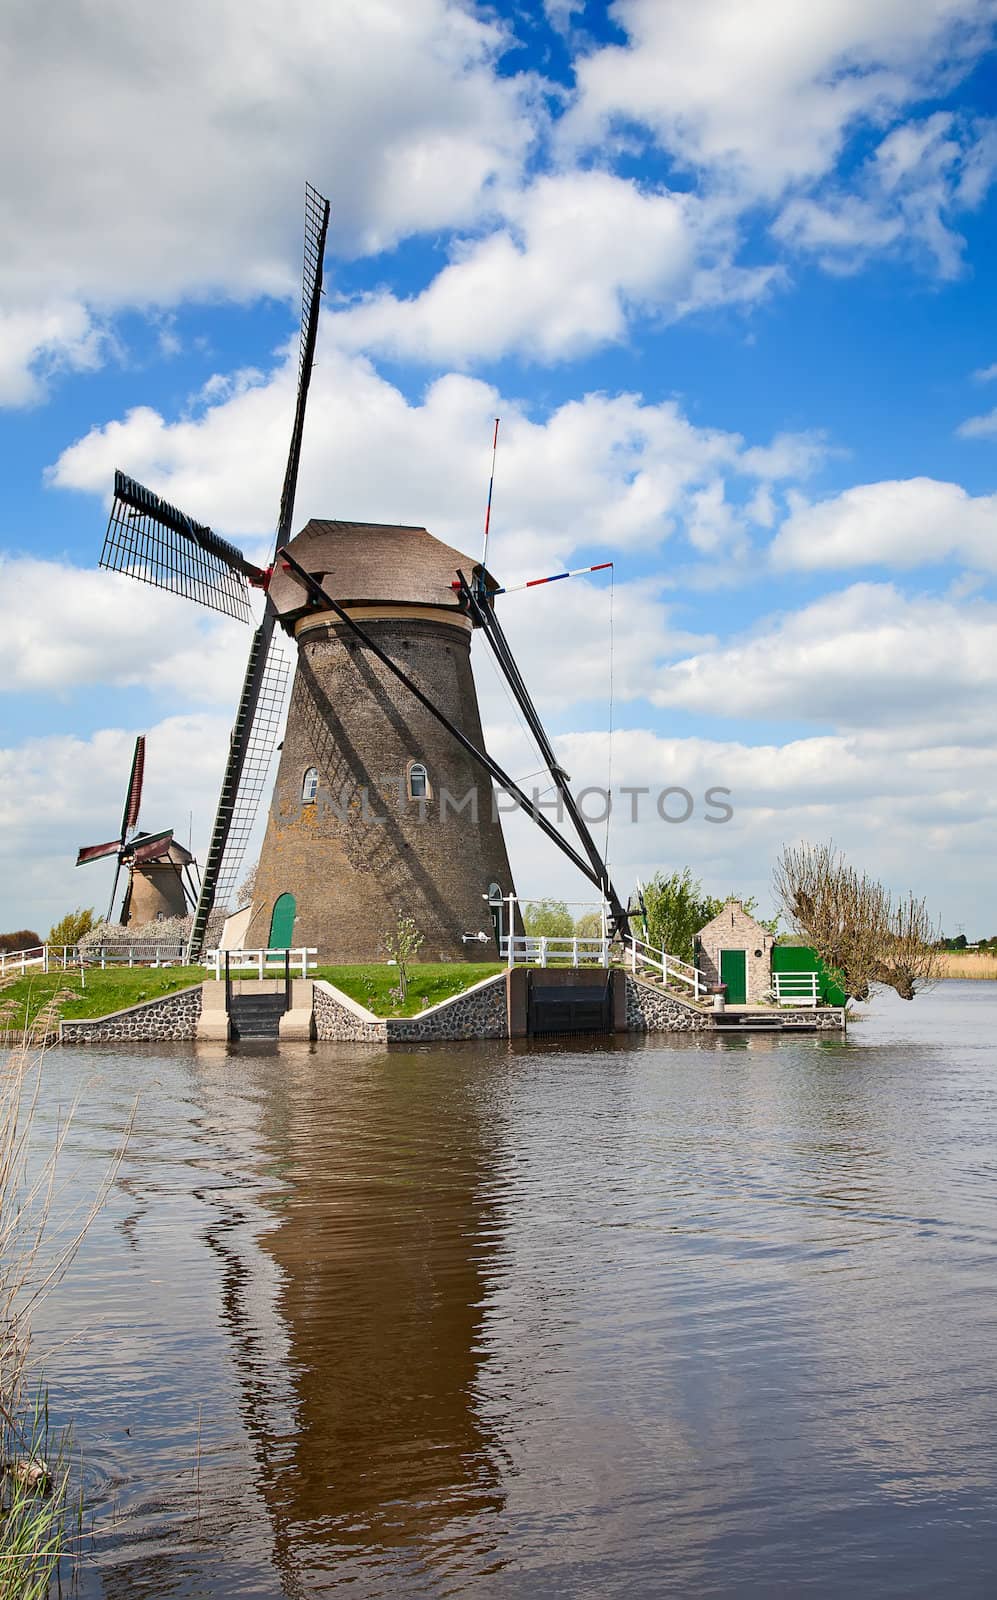 Ancient windmils near Kinderdijk, Netherlands